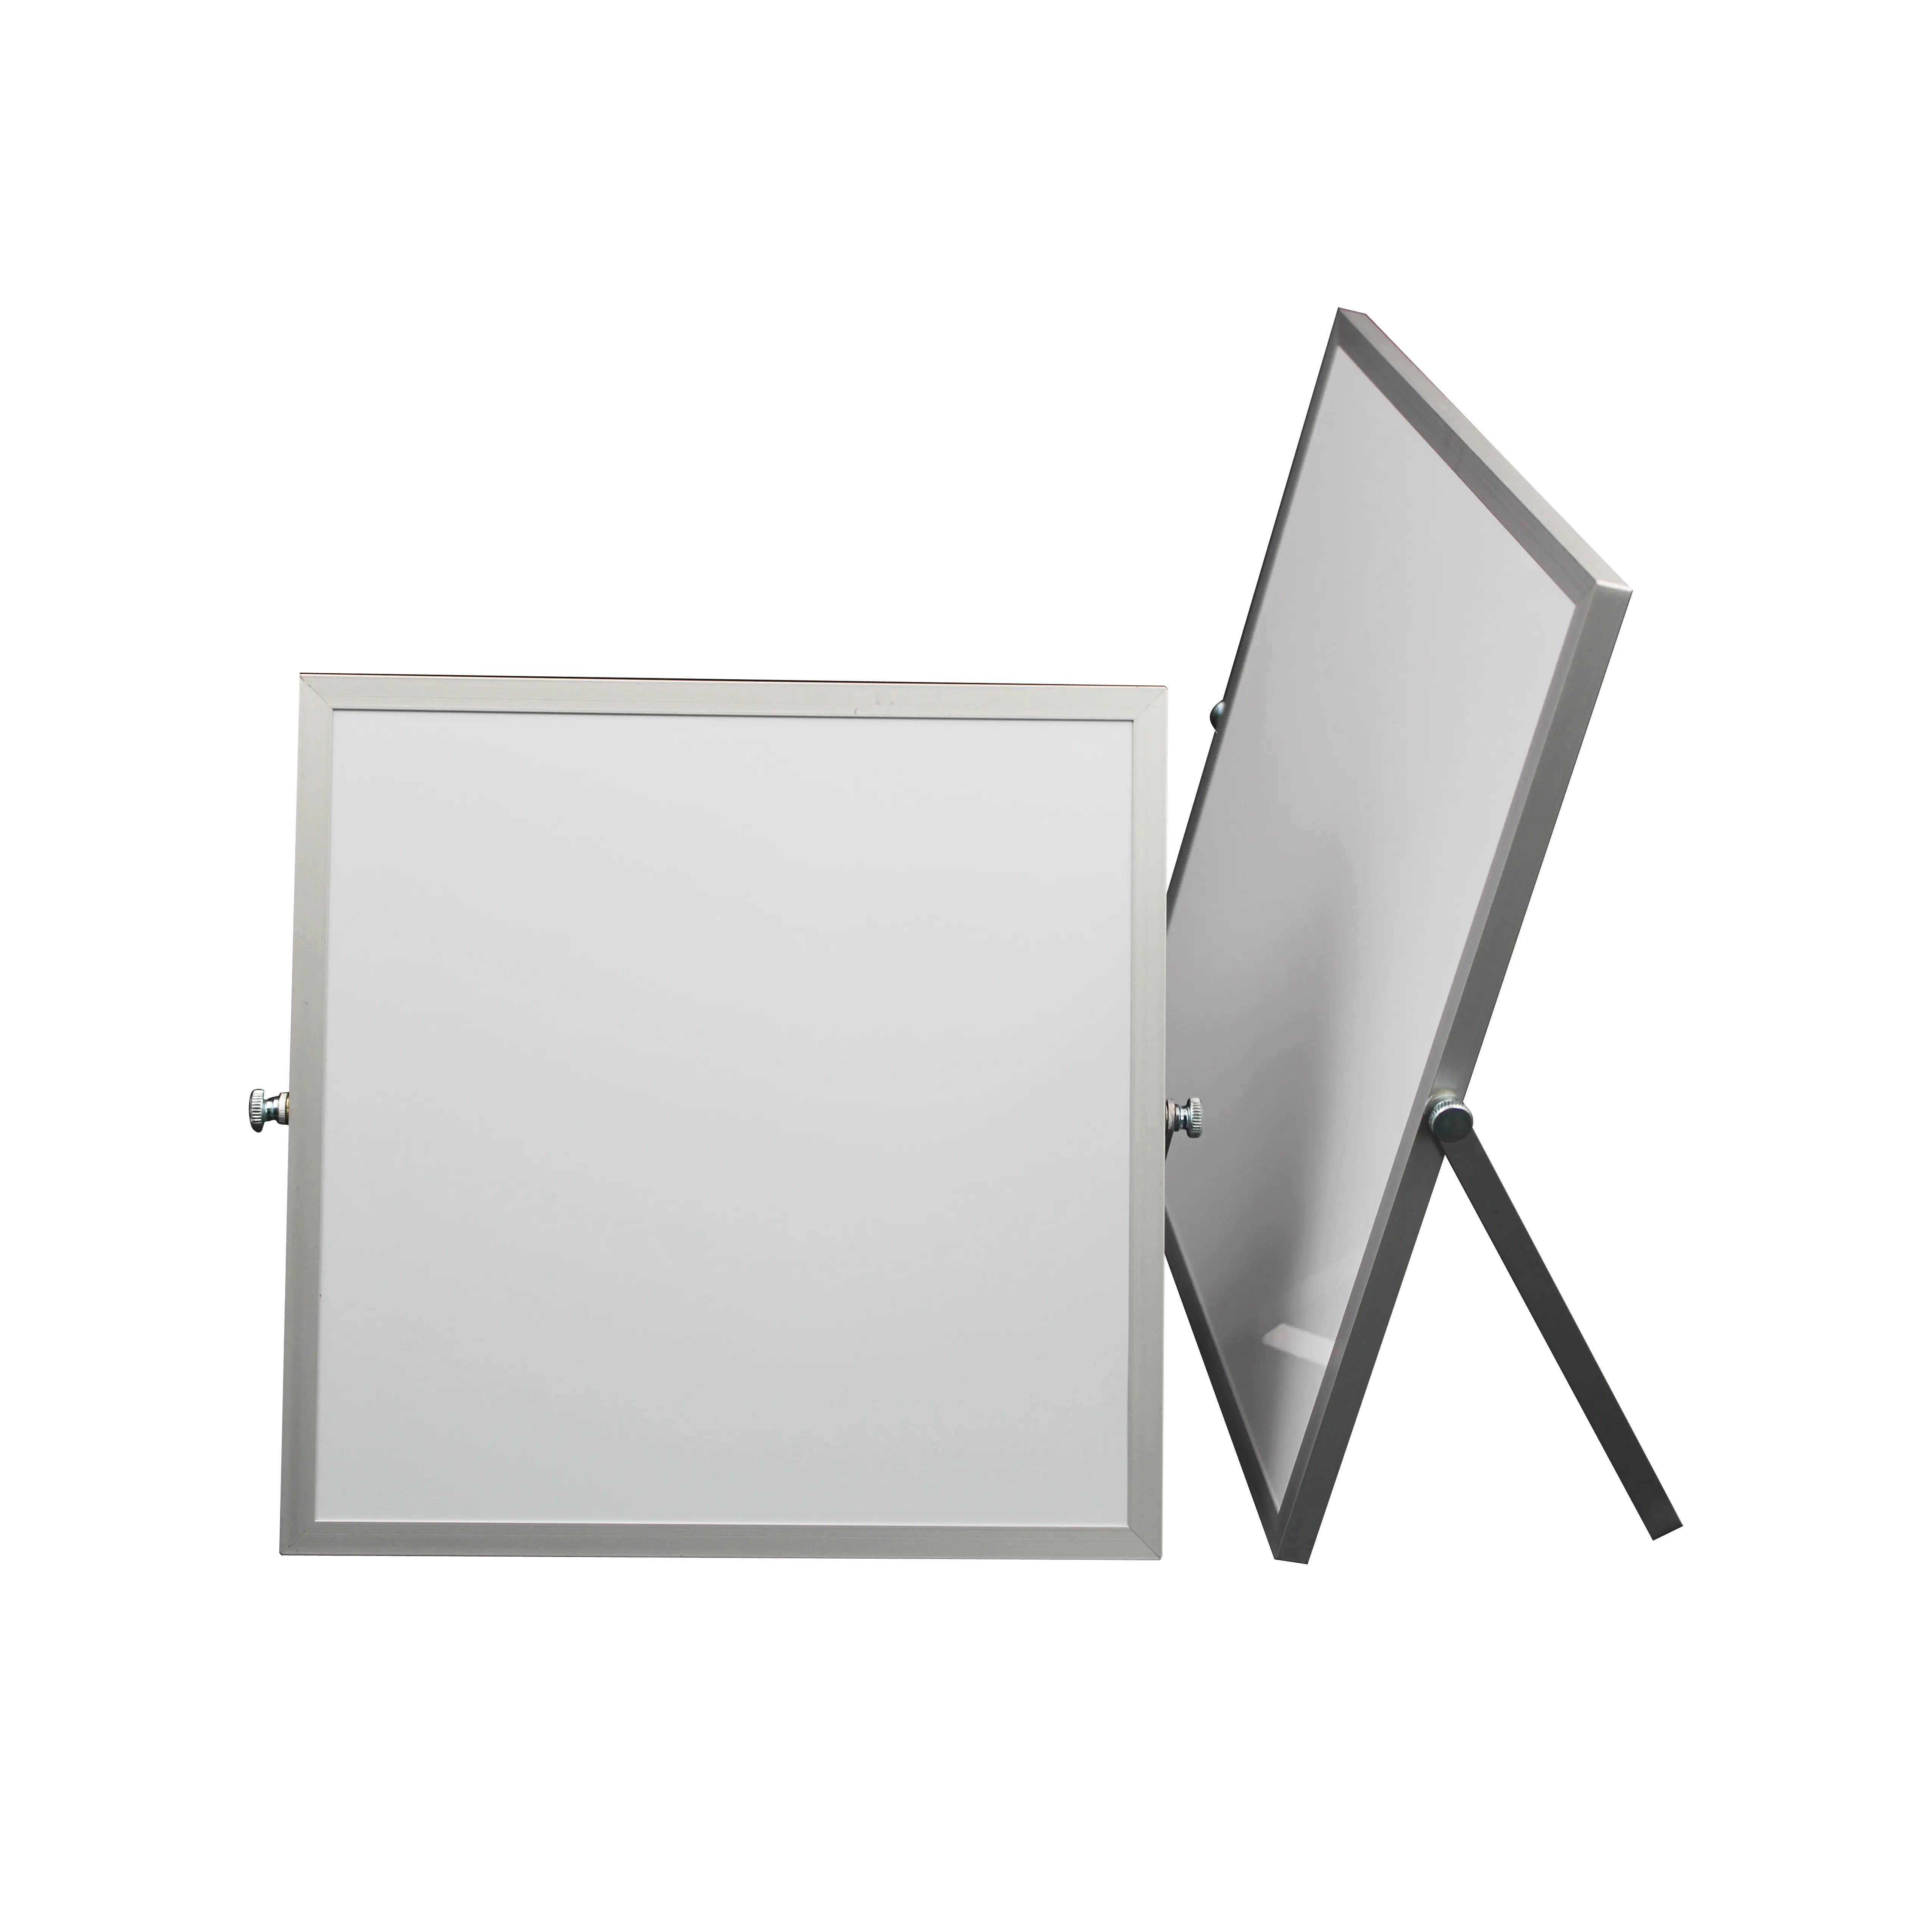 Desktop portable white board 25x25 small magnetic whiteboard for Kids Office Home School foldable dry erase whiteboard